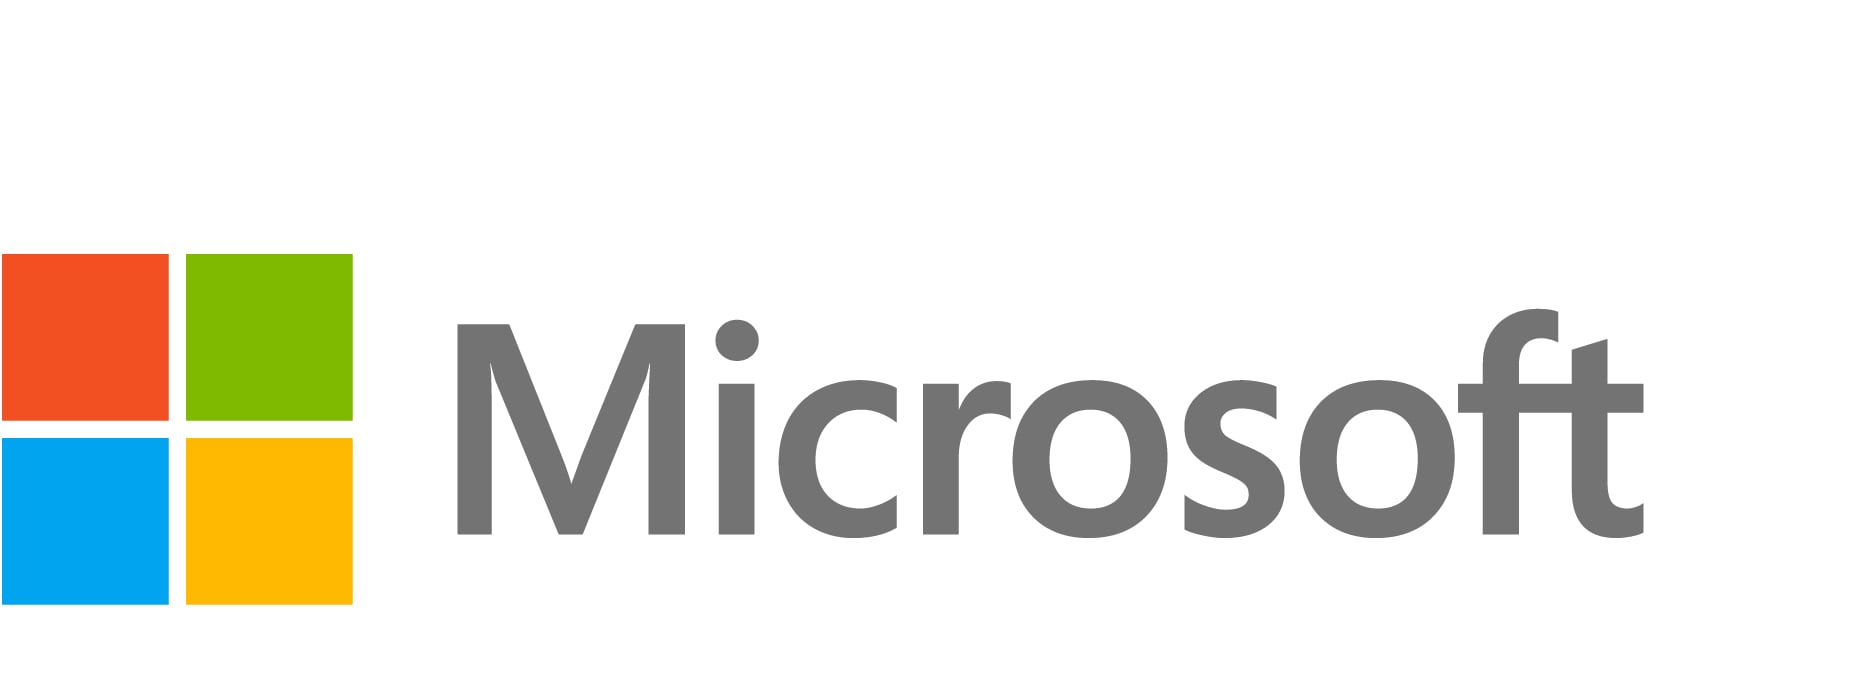 Microsoft Access - software assurance - 1 device